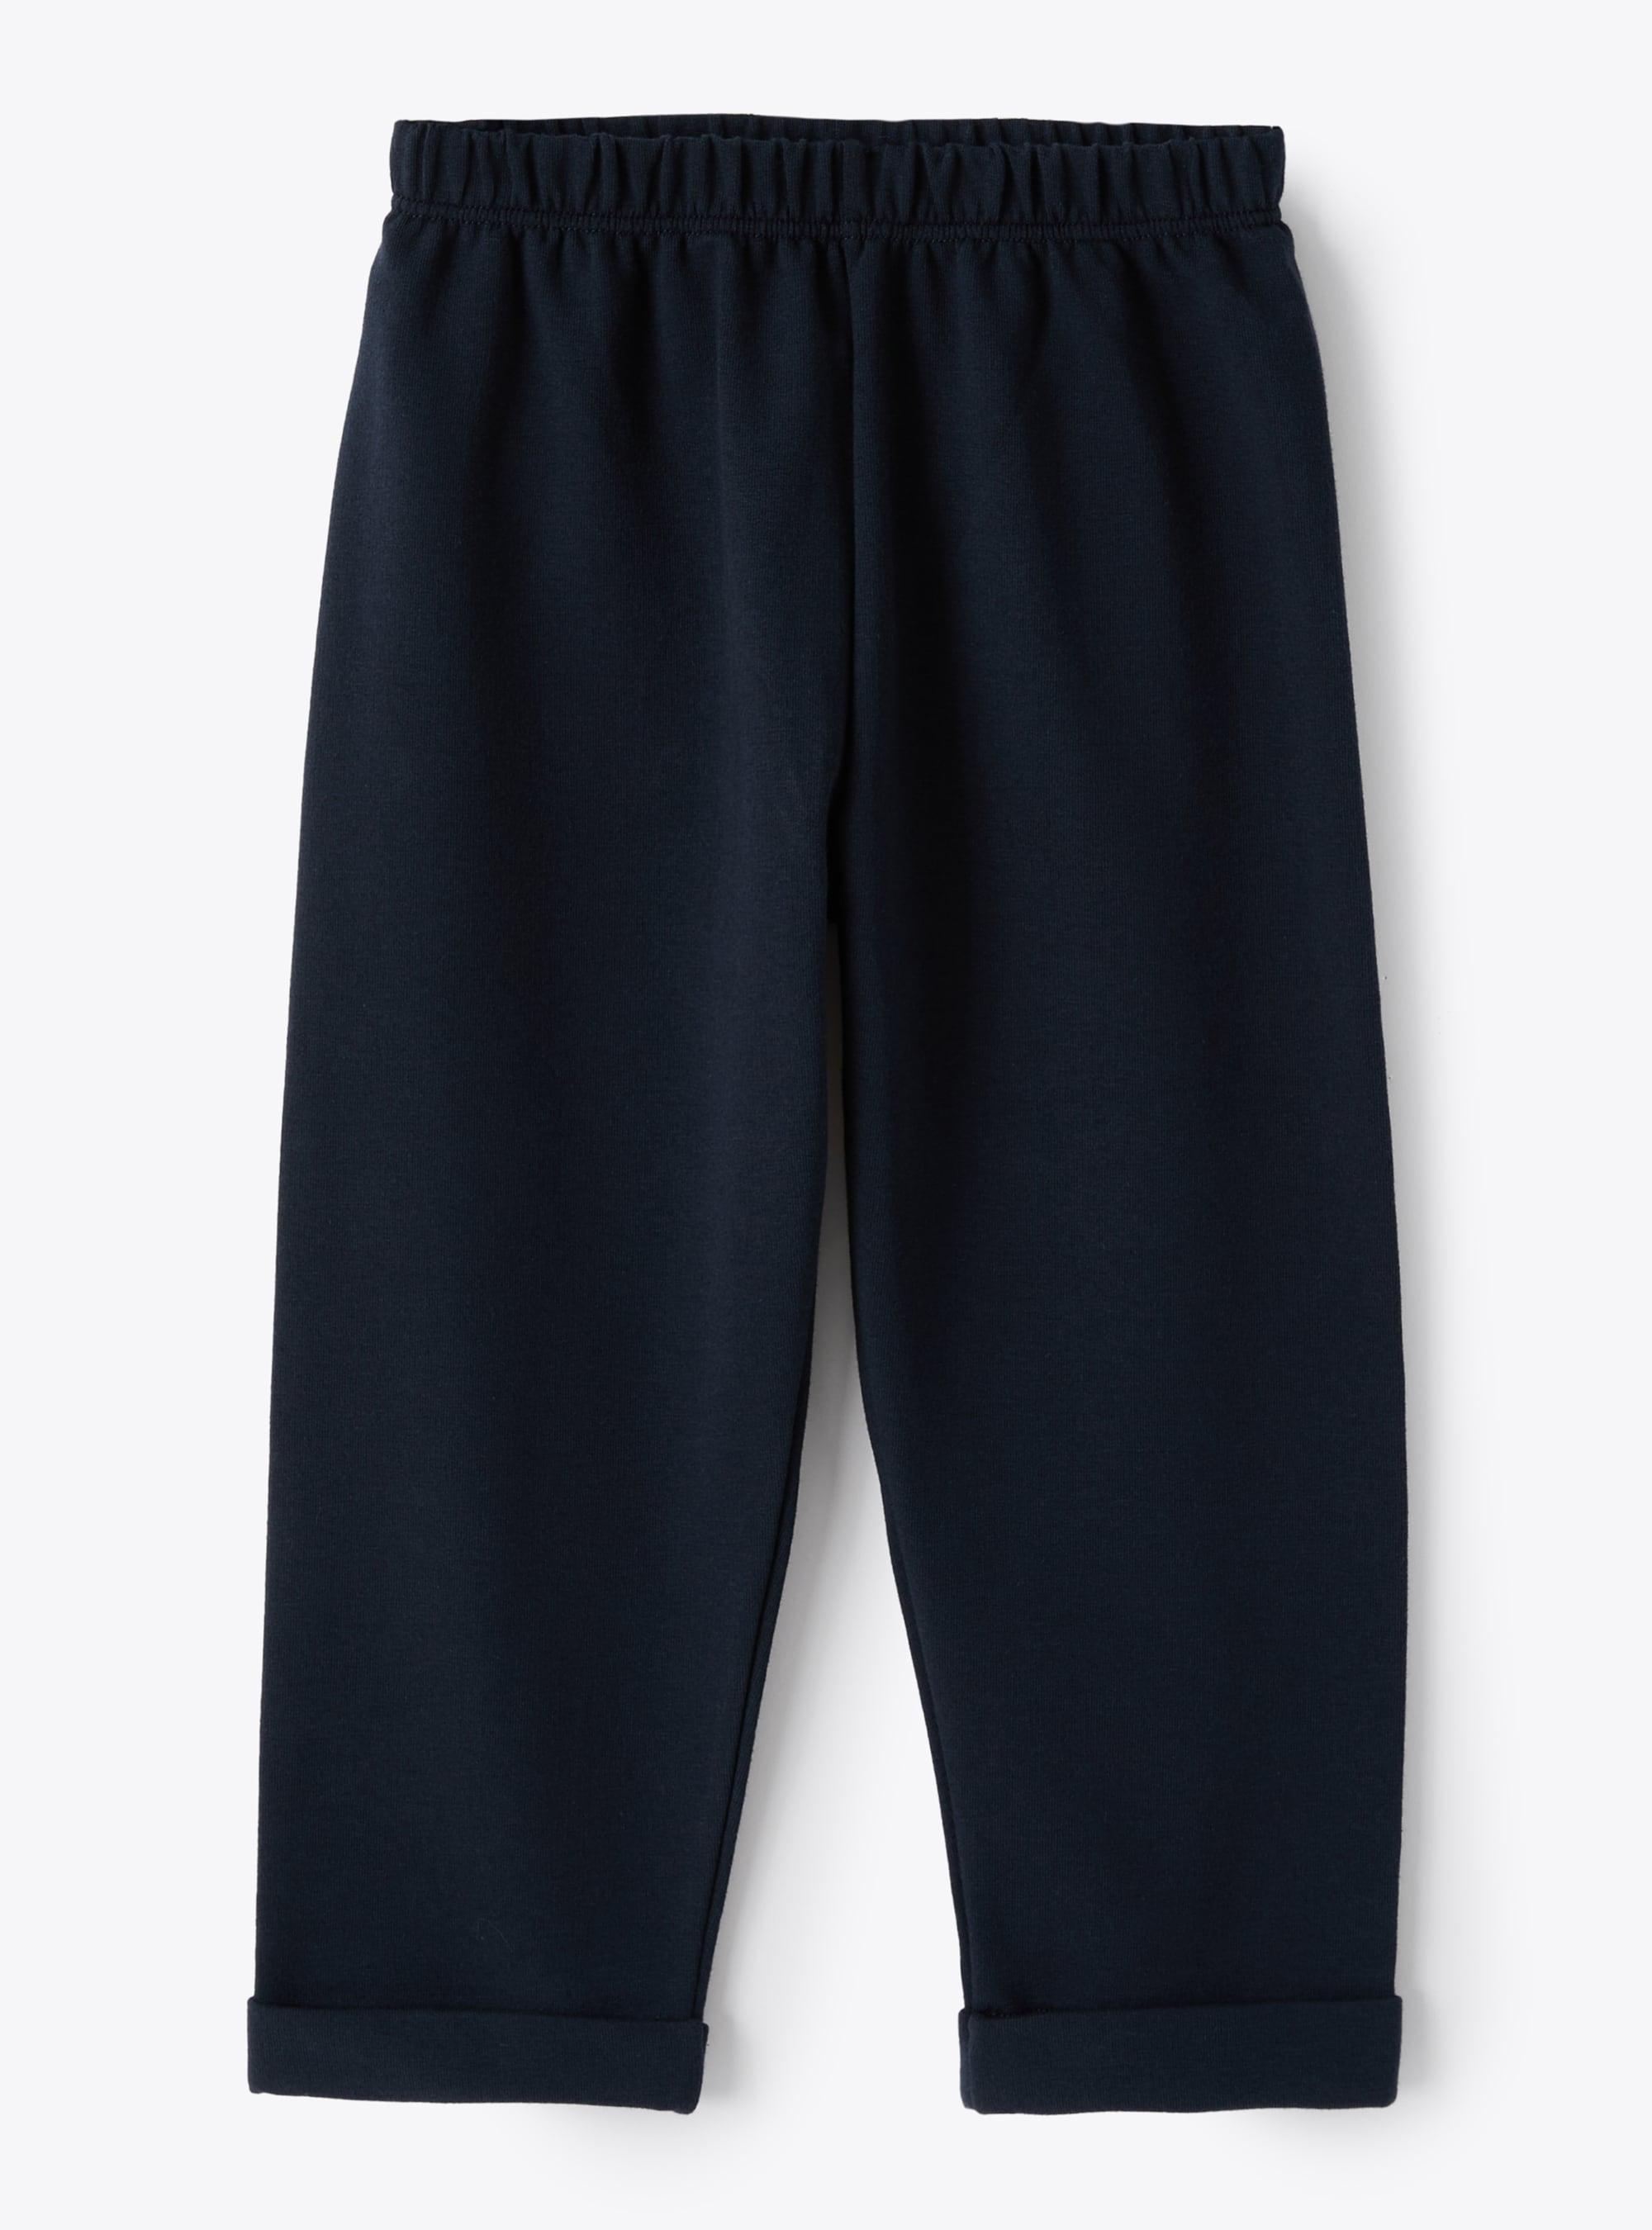 Navy blue stretch fleece trousers - Trousers - Il Gufo